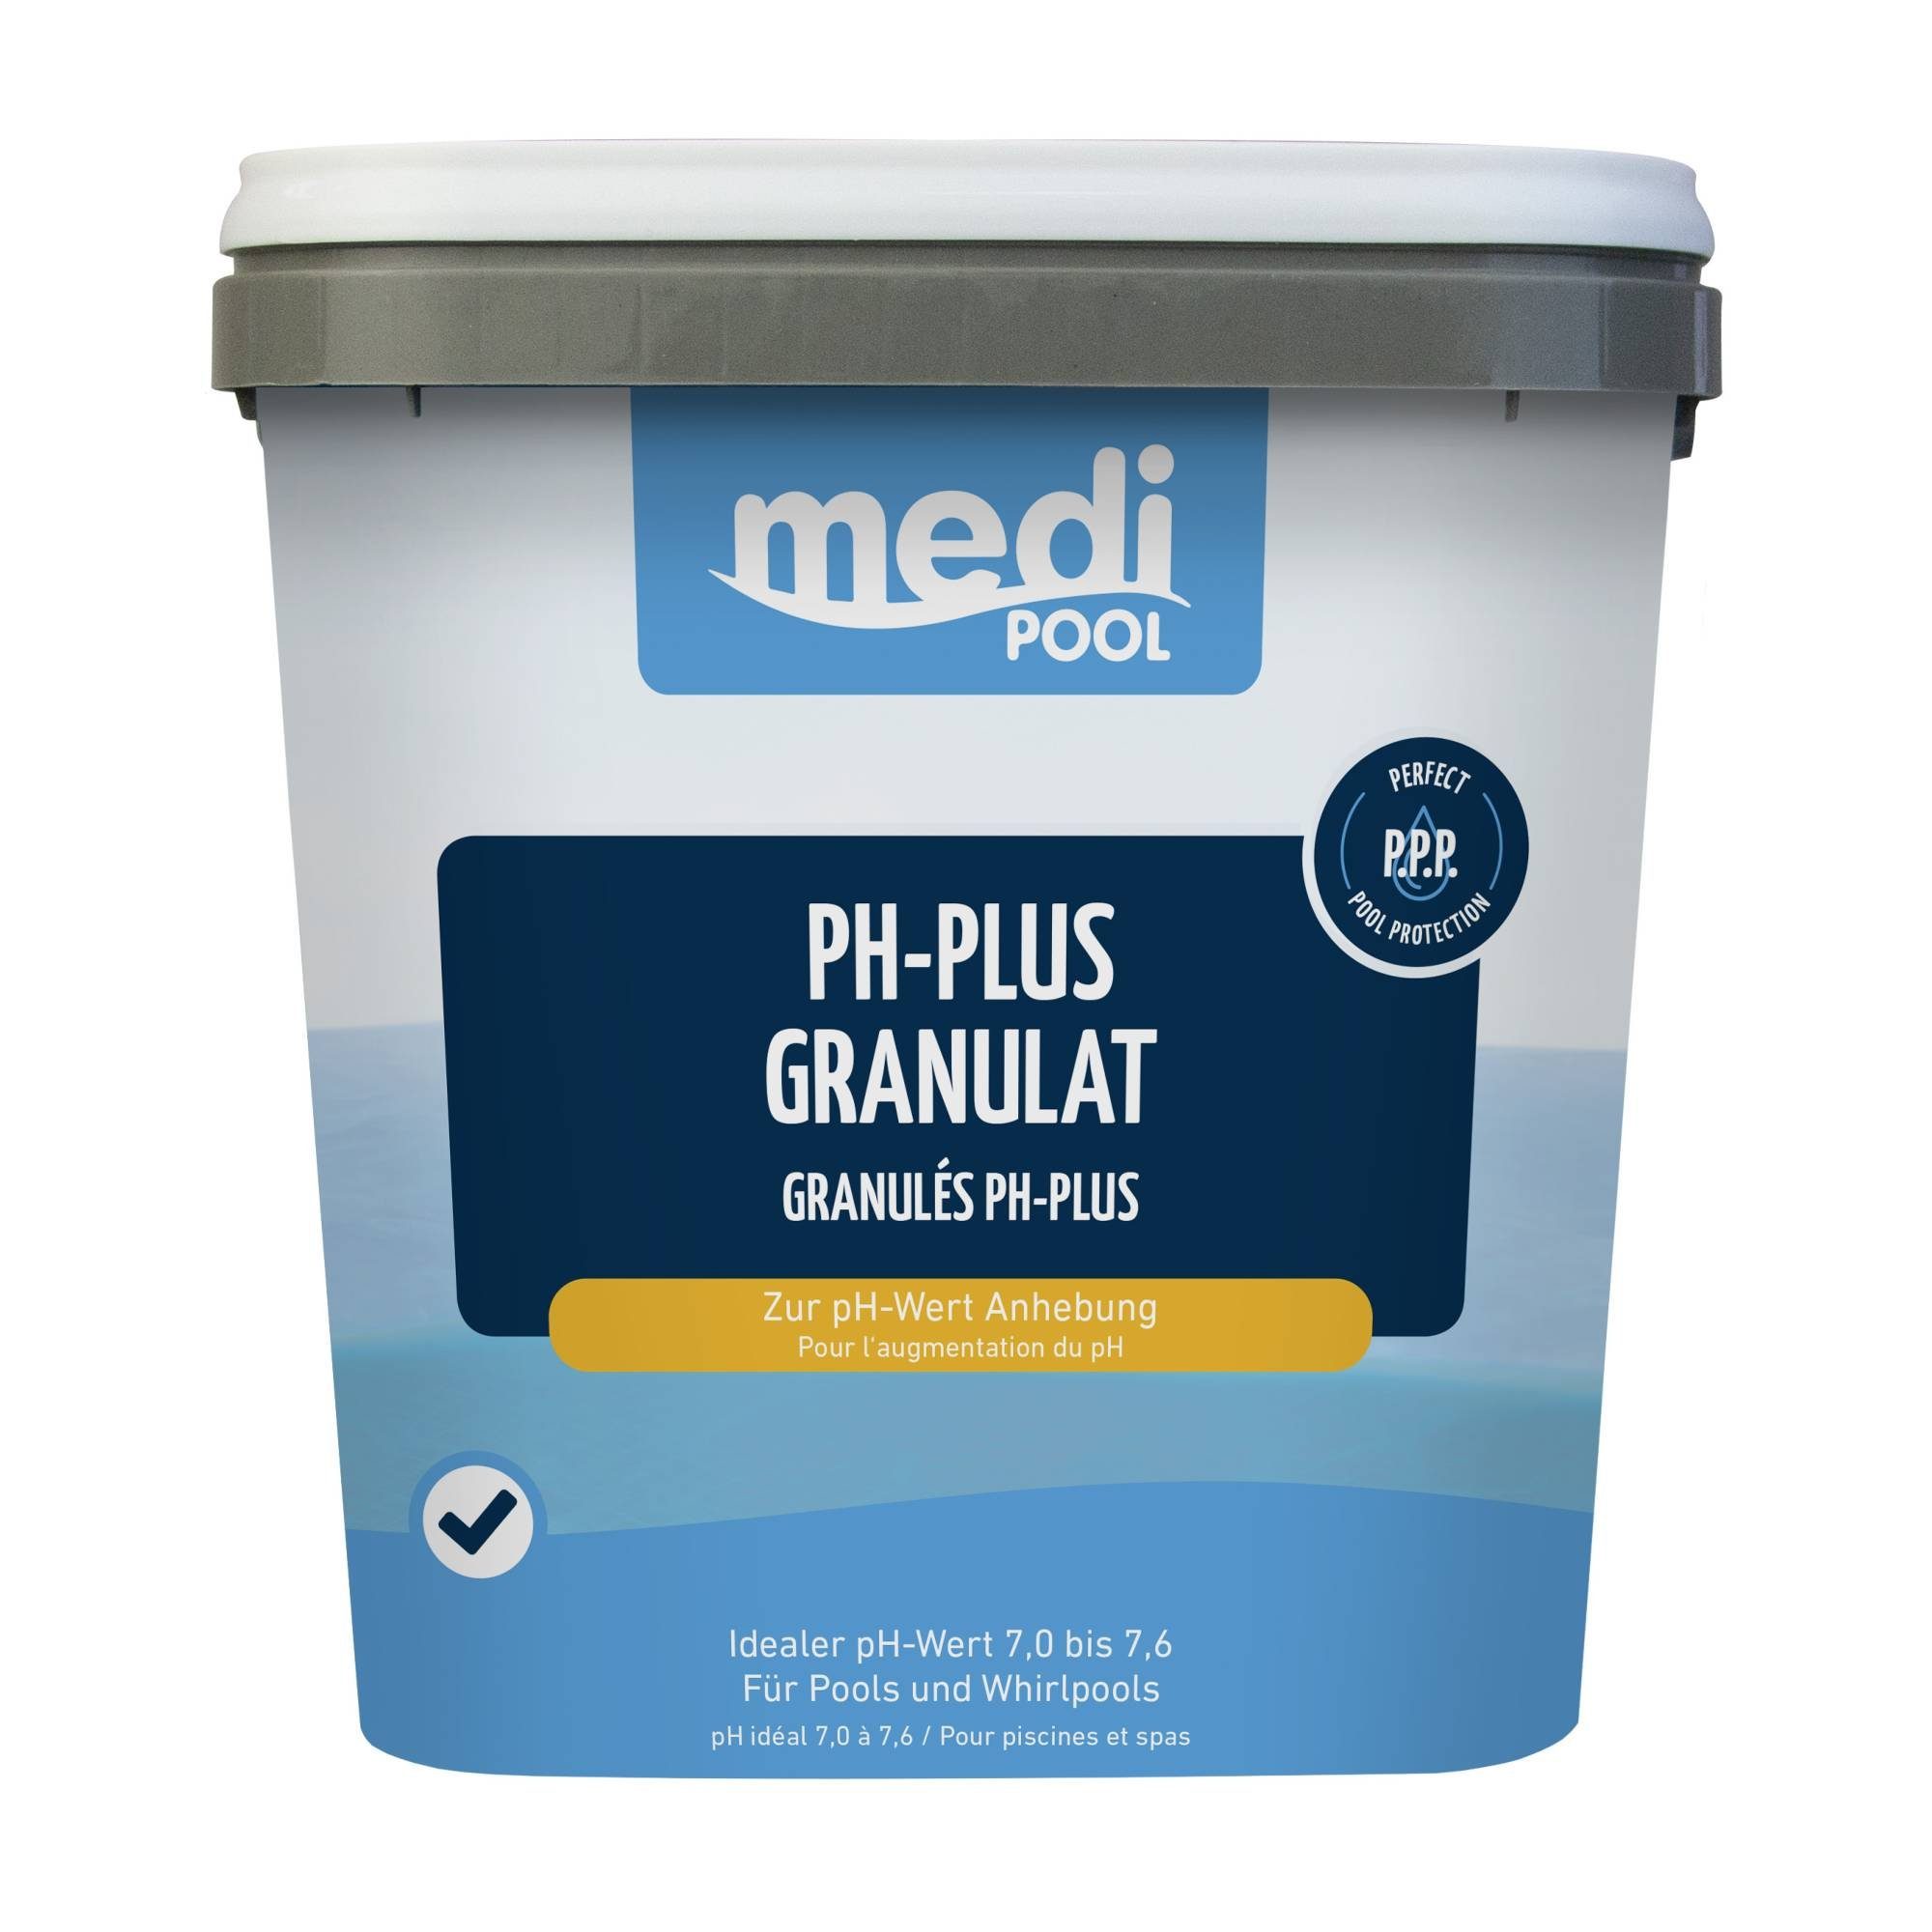 mediPOOL Poolpflege mediPool - pH-Plus Granulat 5,0 kg